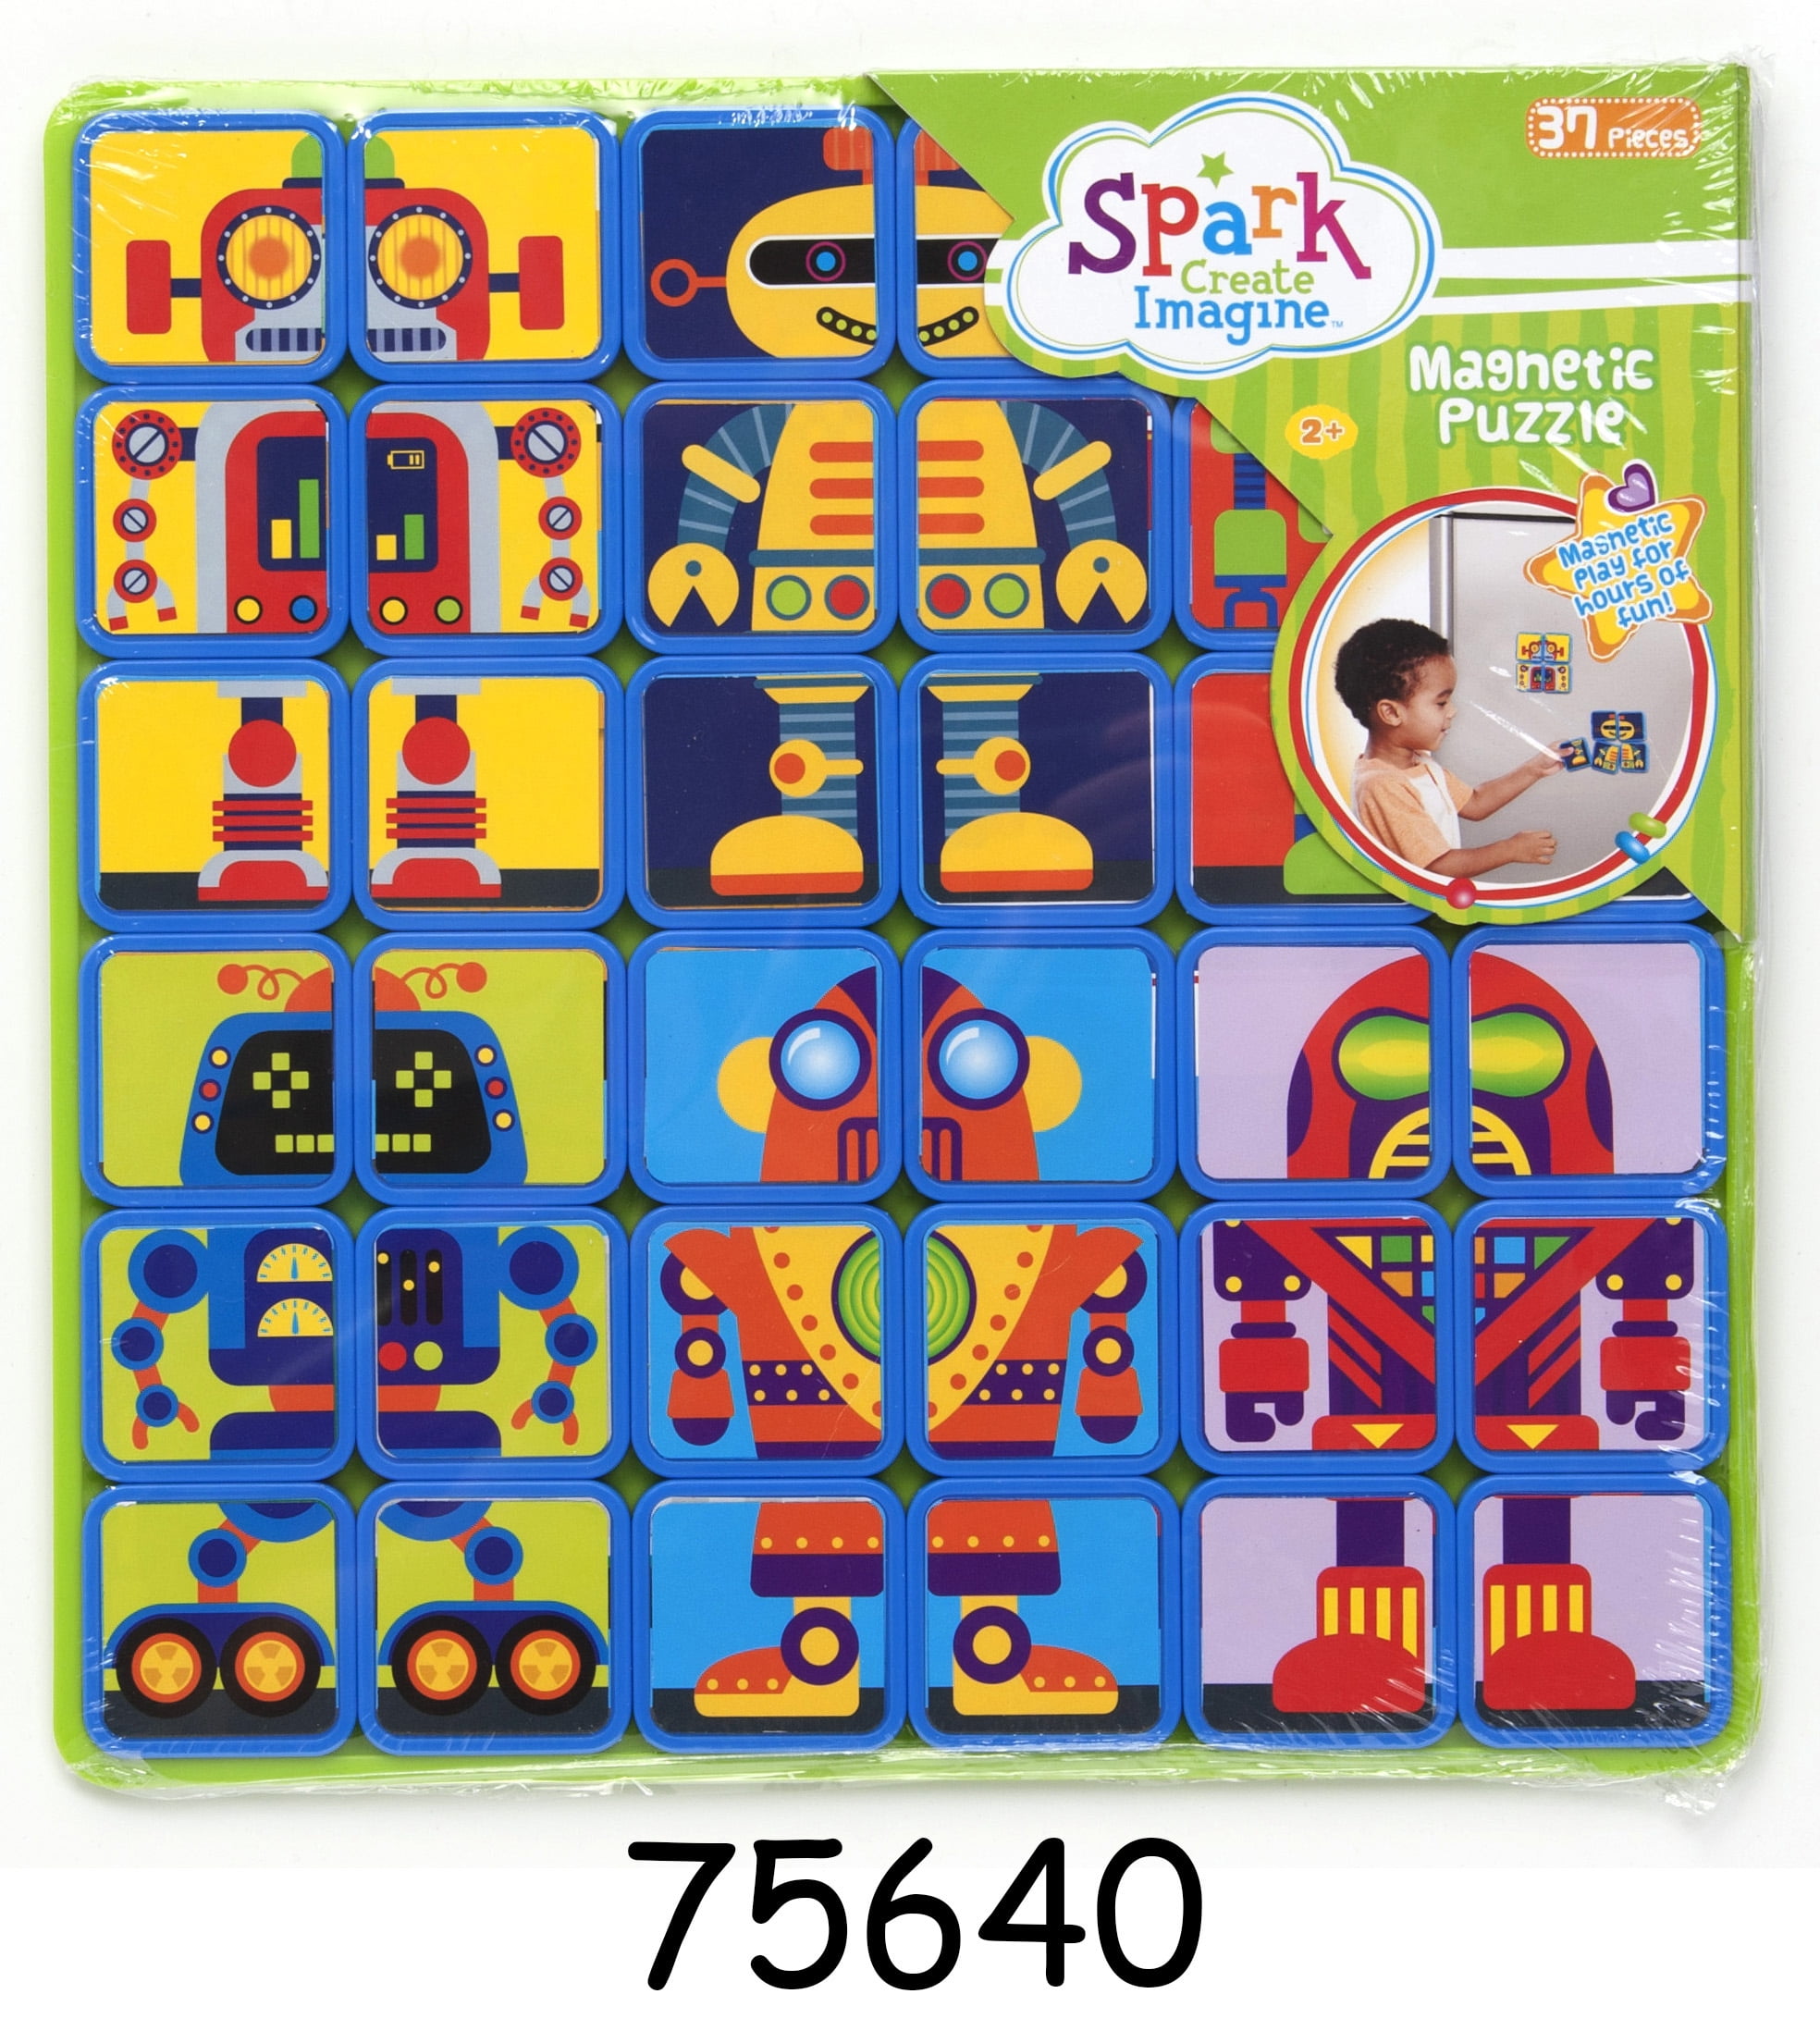 Spark Sprk Robot Puzzle